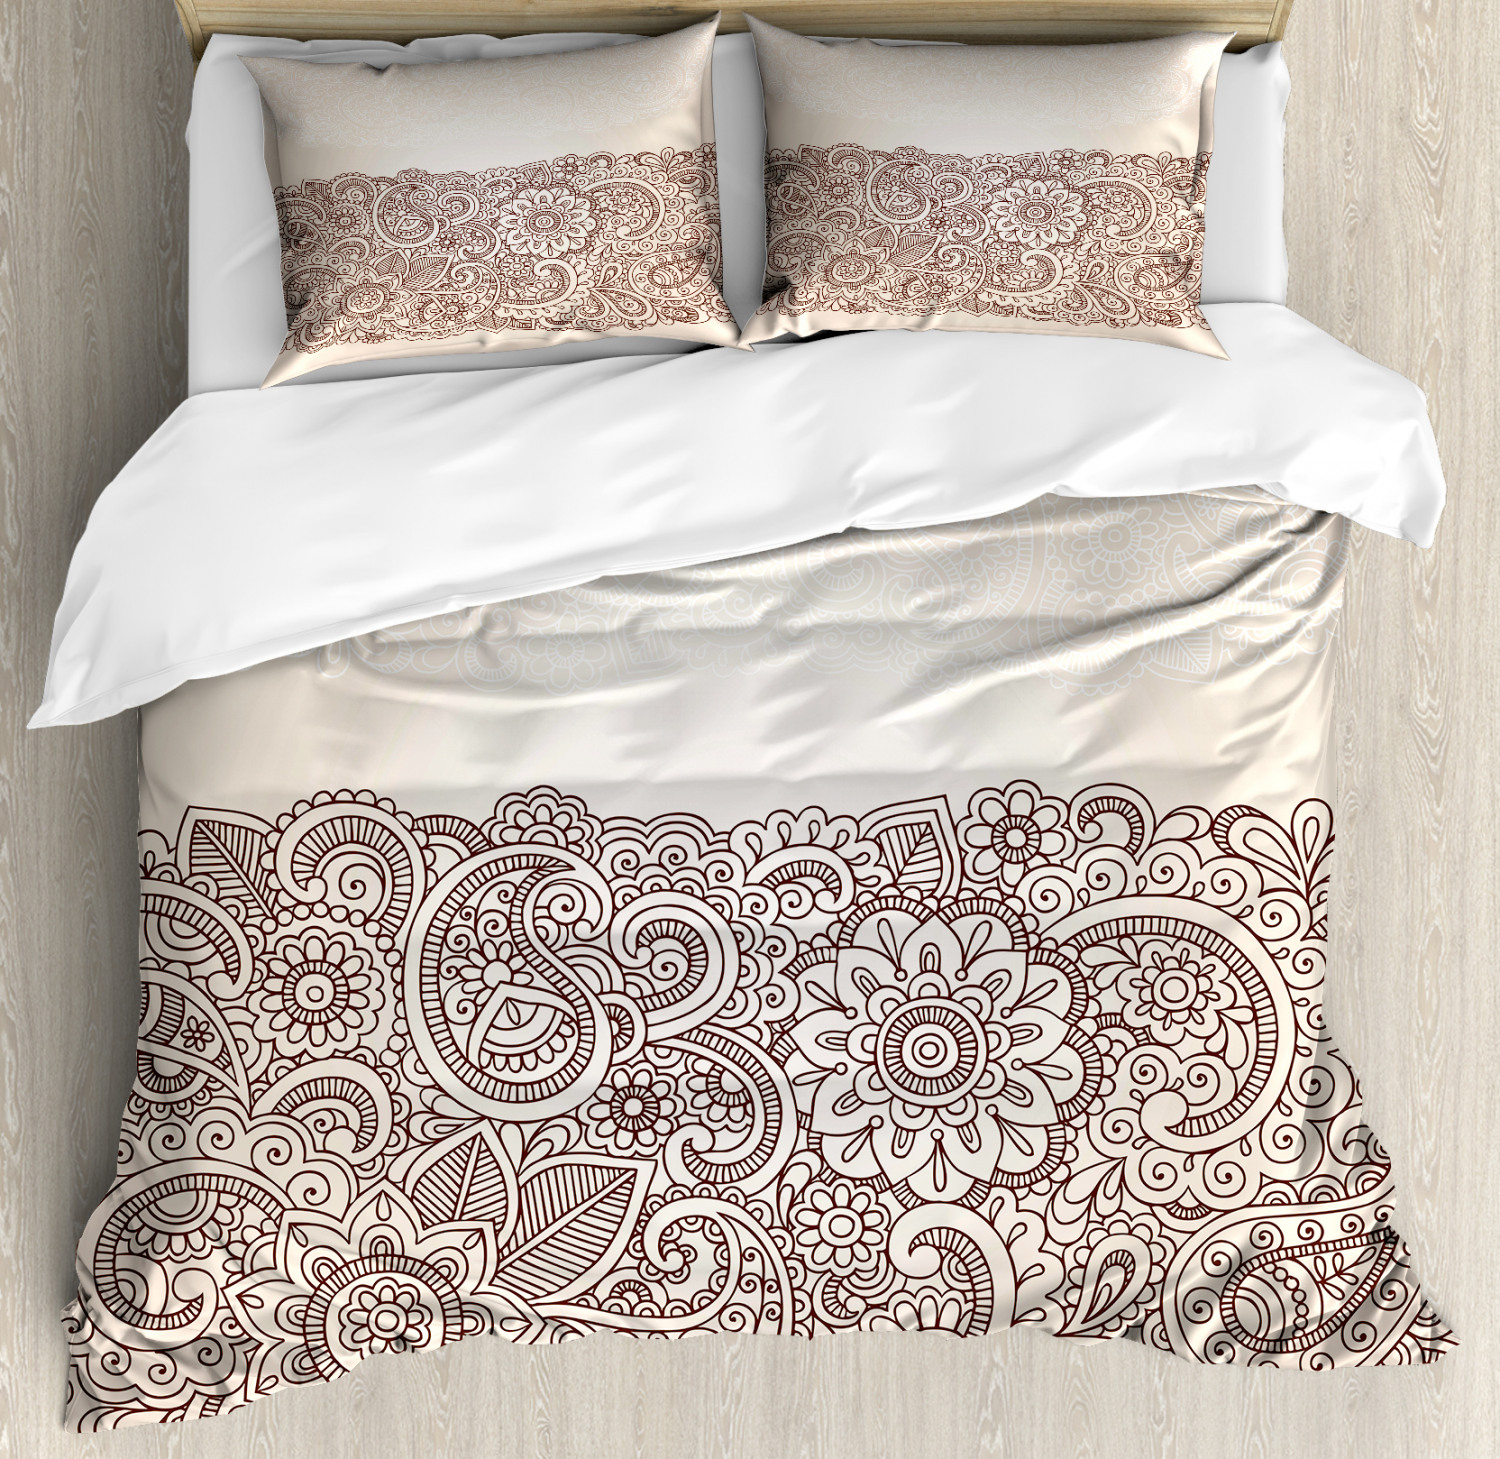 Henna Duvet Cover Set With Pillow Shams Mandala Paisley Pattern